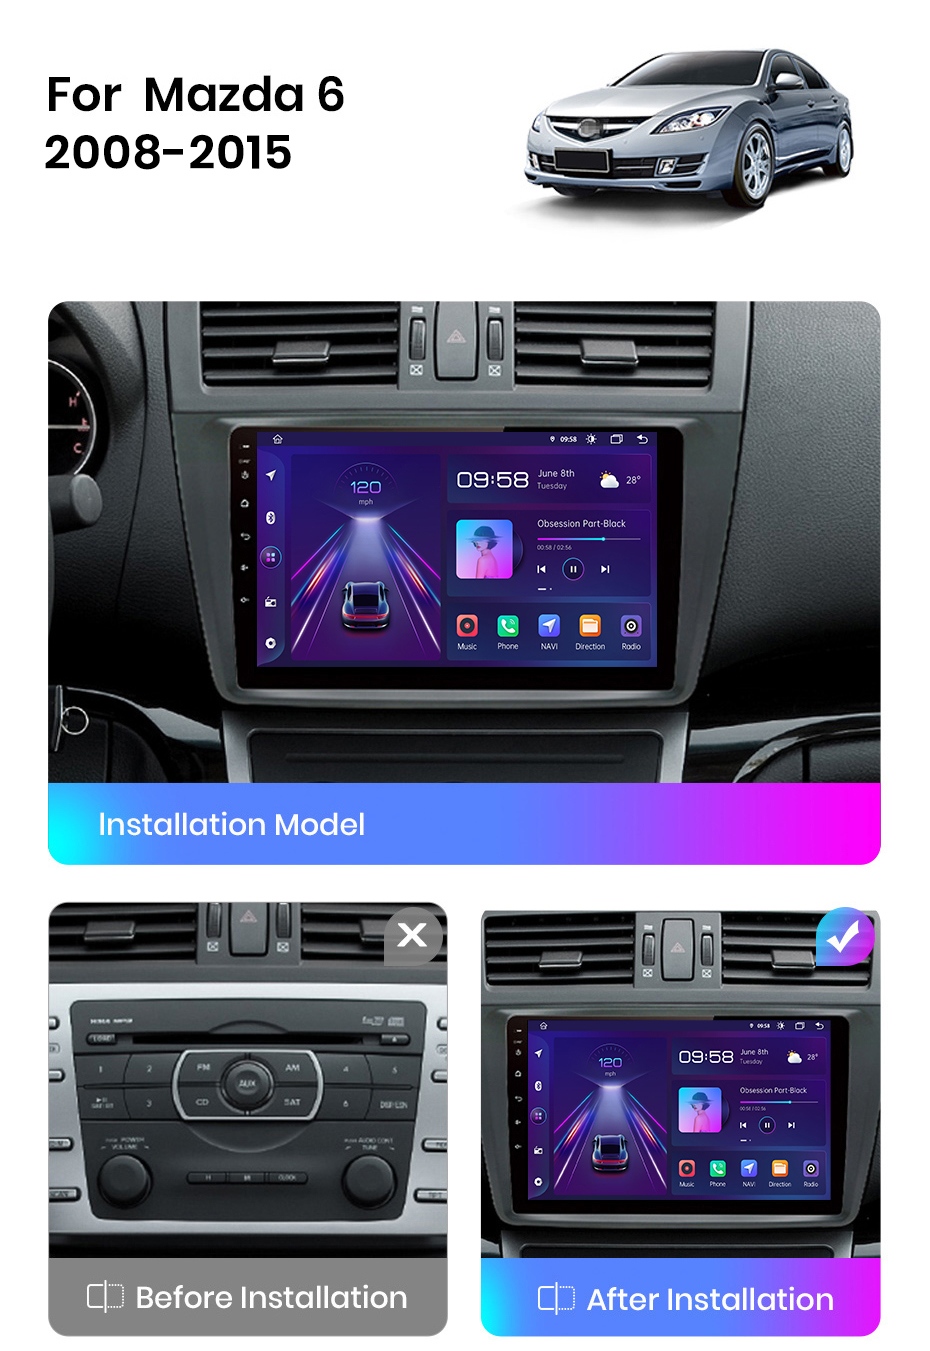 Junsun V1 AI Voice Wireless CarPlay Android Auto Radio For GOLF 6